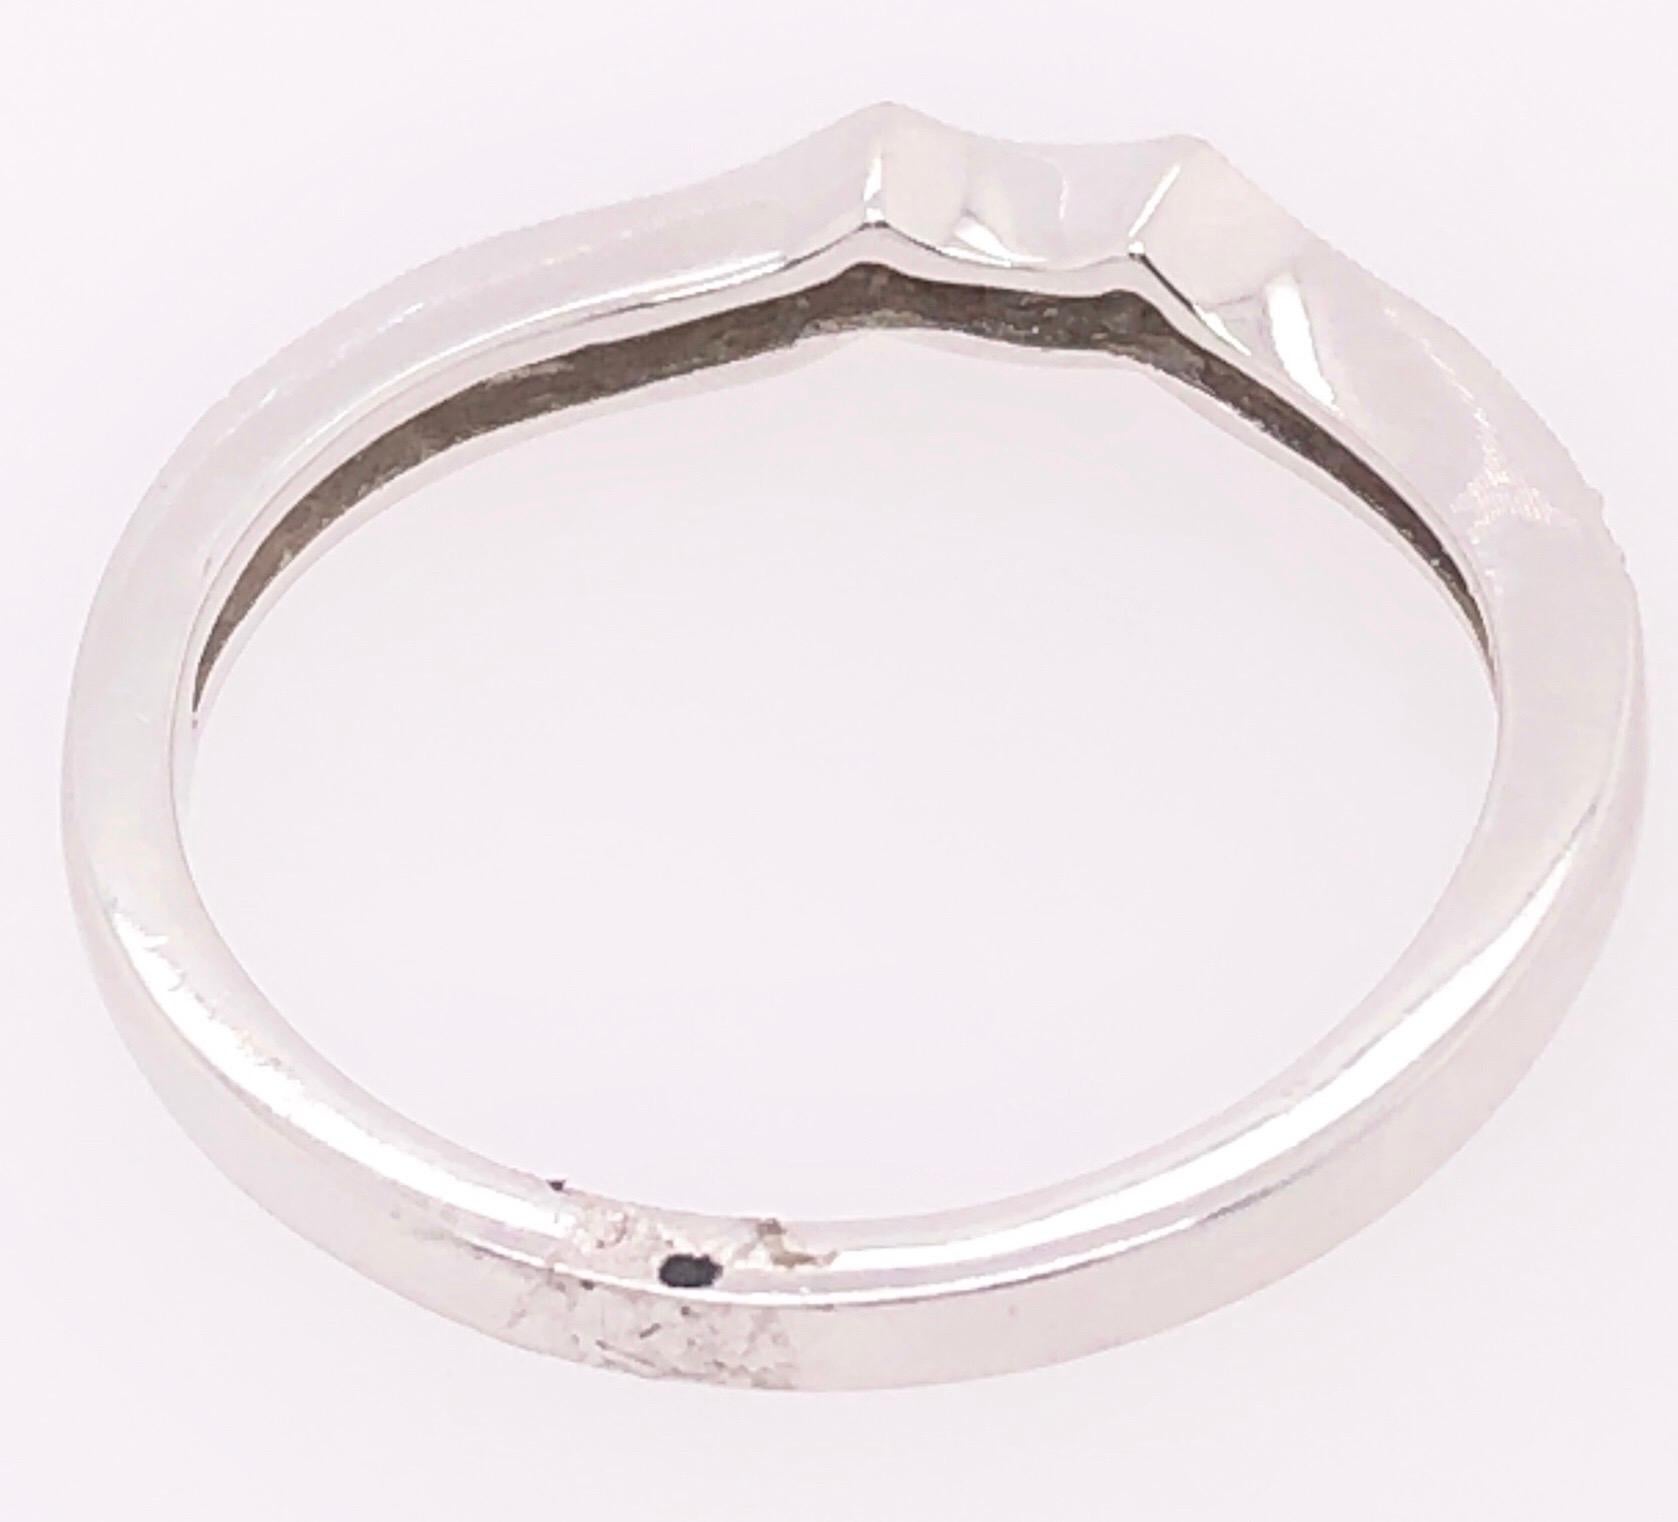 18 Karat White Gold And Diamond Wedding Contour Band Bridal Ring

.0.25 Total Diamond Weight.
Size 6.75
2.47 grams total weight.